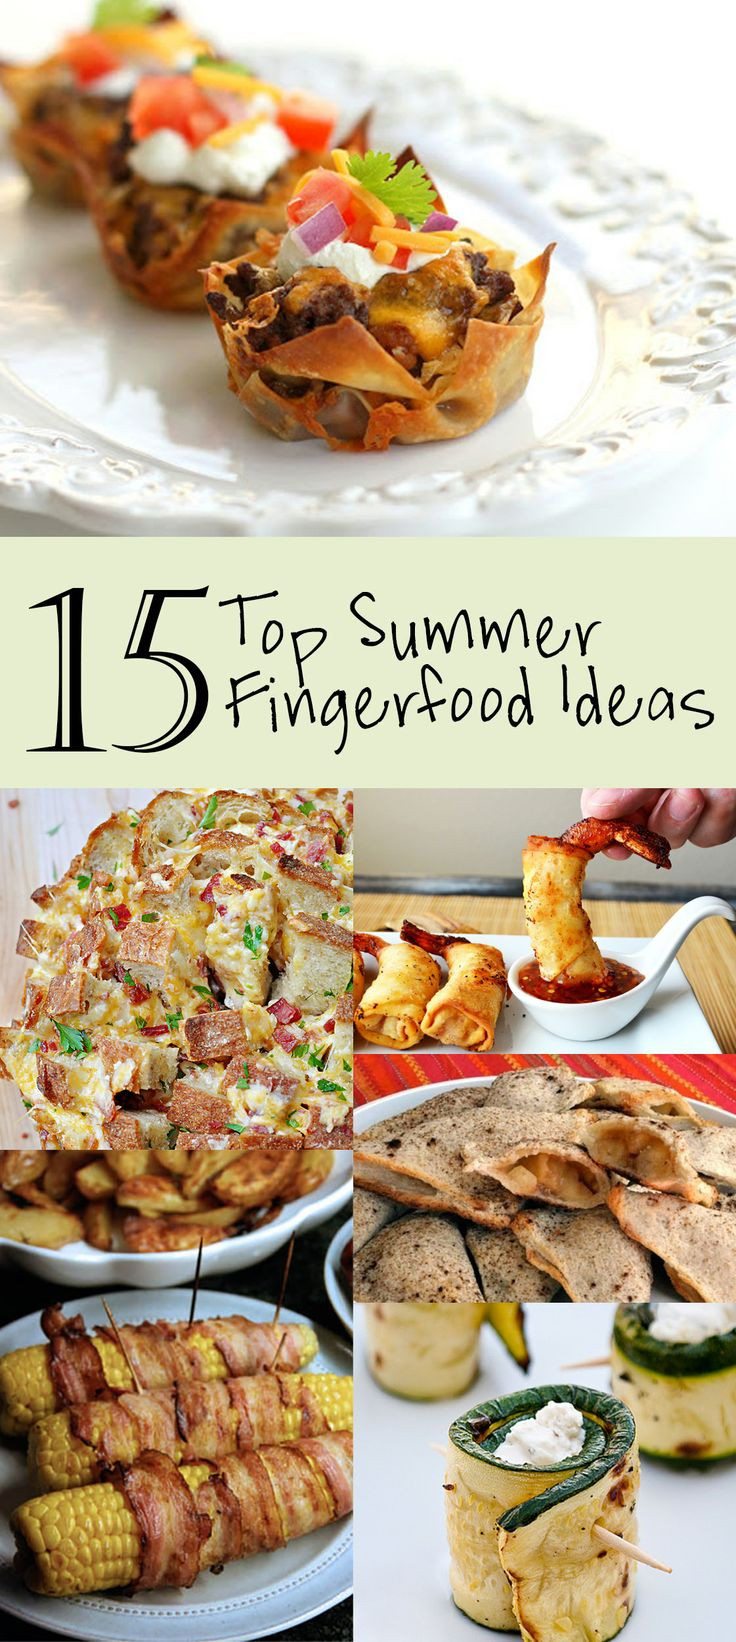 Summertime Party Food Ideas
 Best 25 Summer finger foods ideas on Pinterest